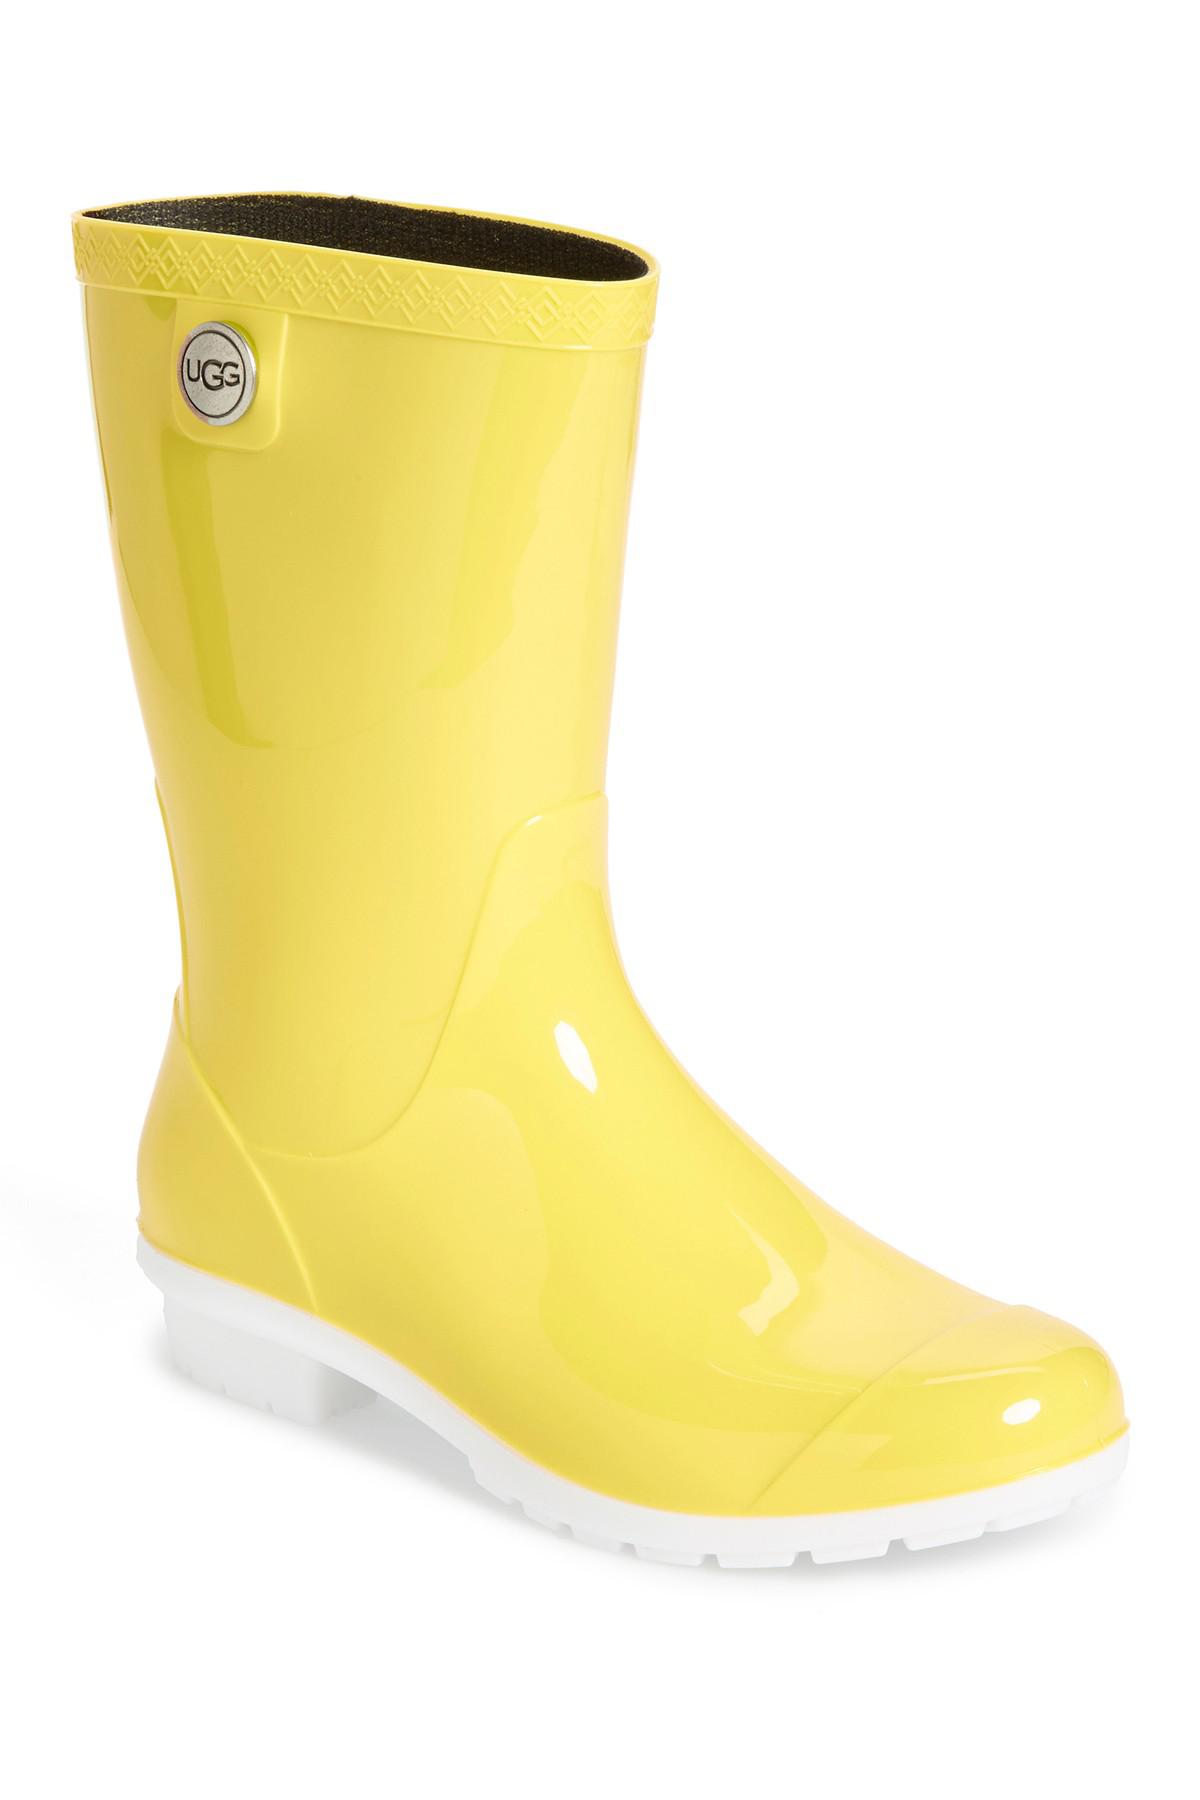 yellow ugg rain boots